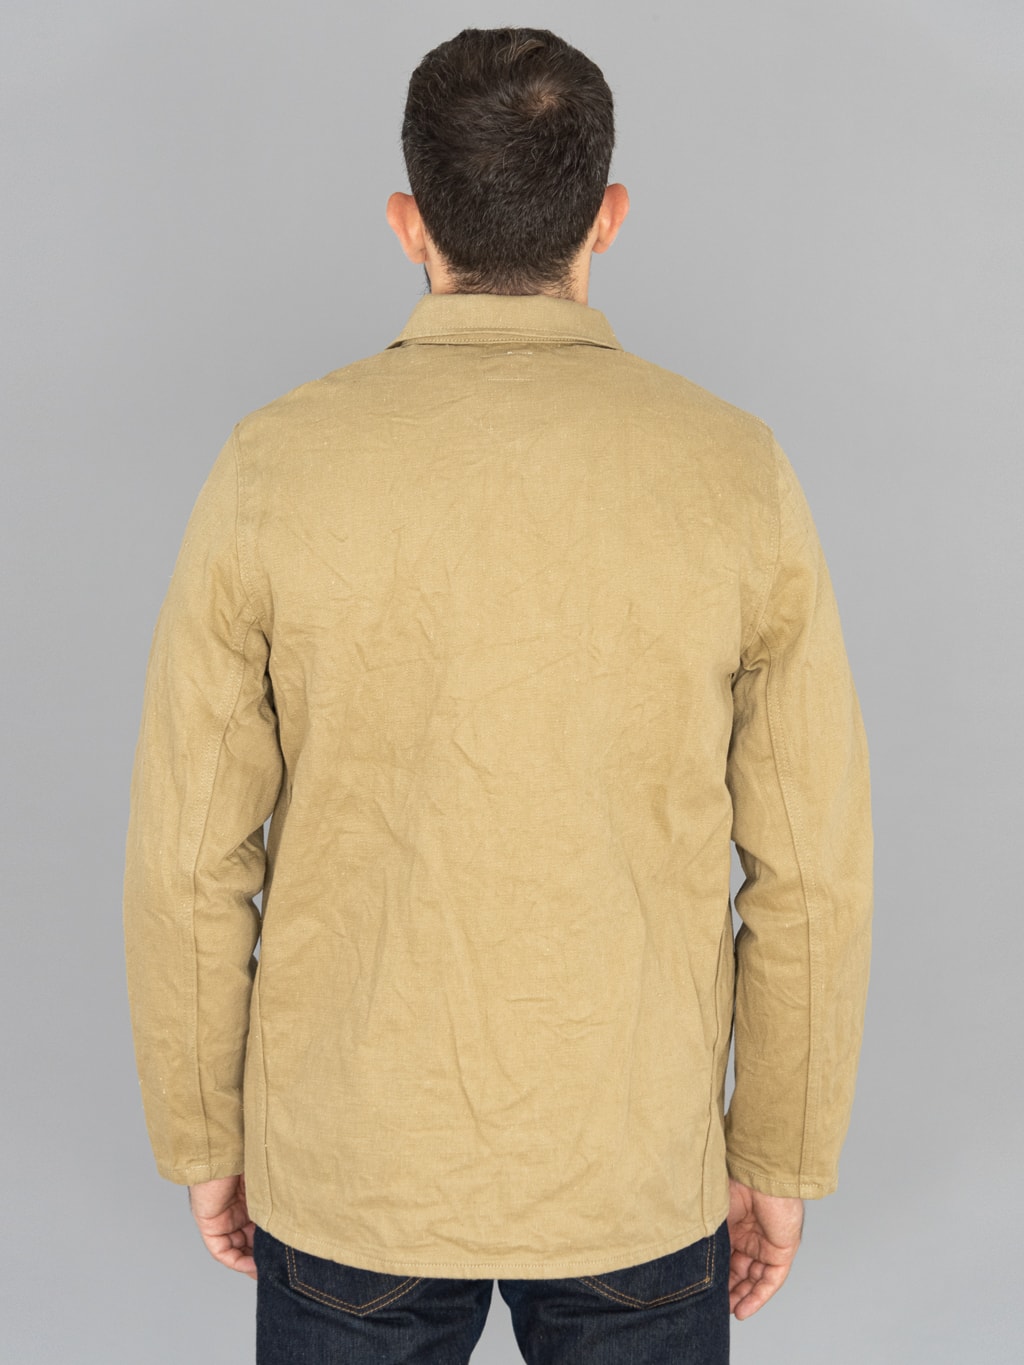 ONI Denim 03501 Sulfur Coverall Jacket Khaki Beige model back fit